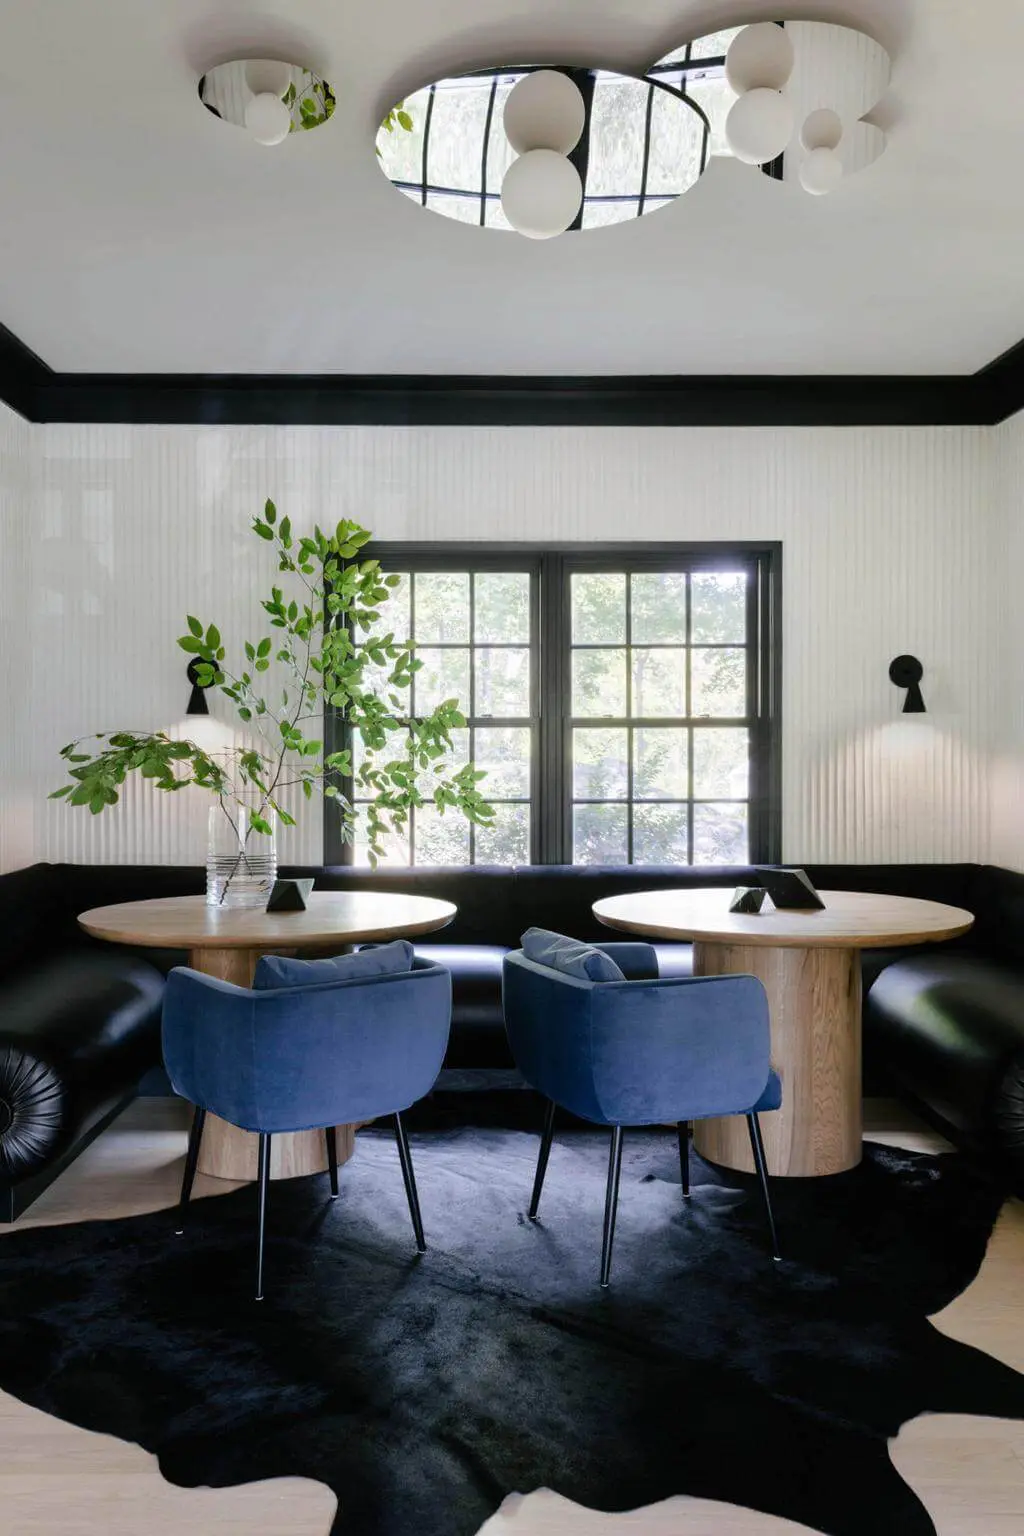 https://hommes.studio/wp-content/uploads/hommes-studio-journal-modern-dining-room-decor-ideas-1-1.jpeg.webp